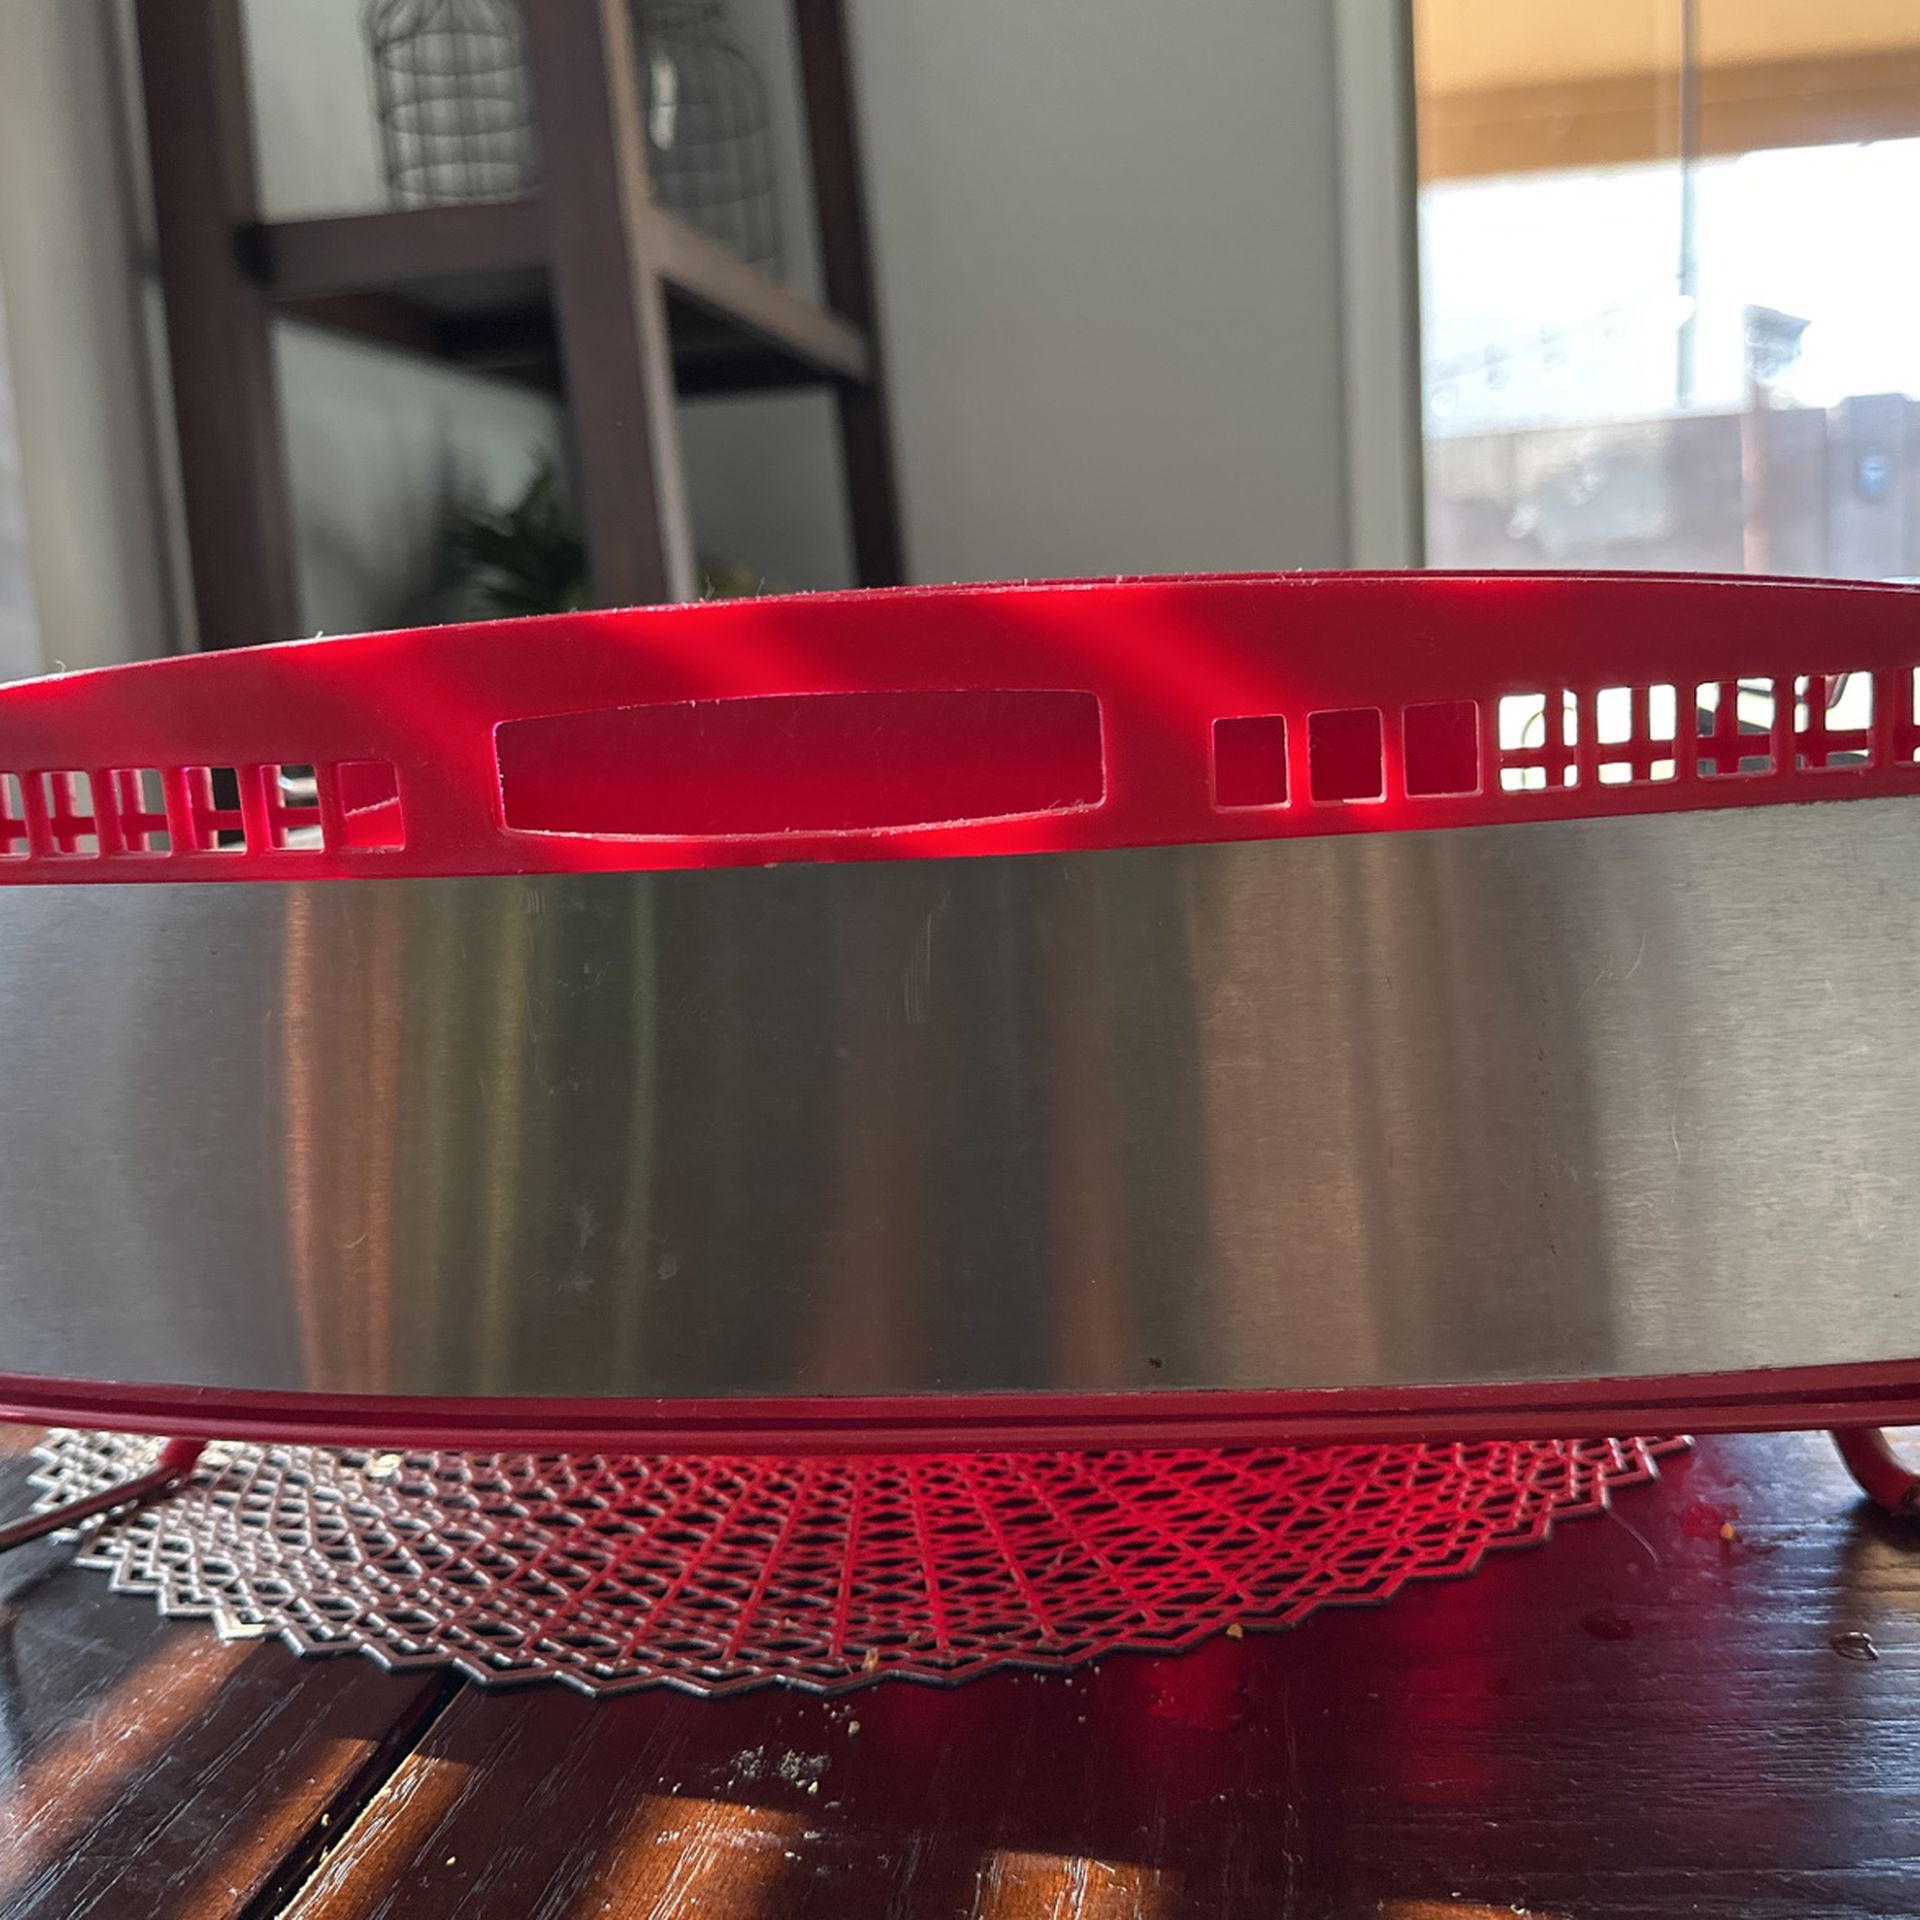 KitchenAid Classic 3-piece Red Dish Rack